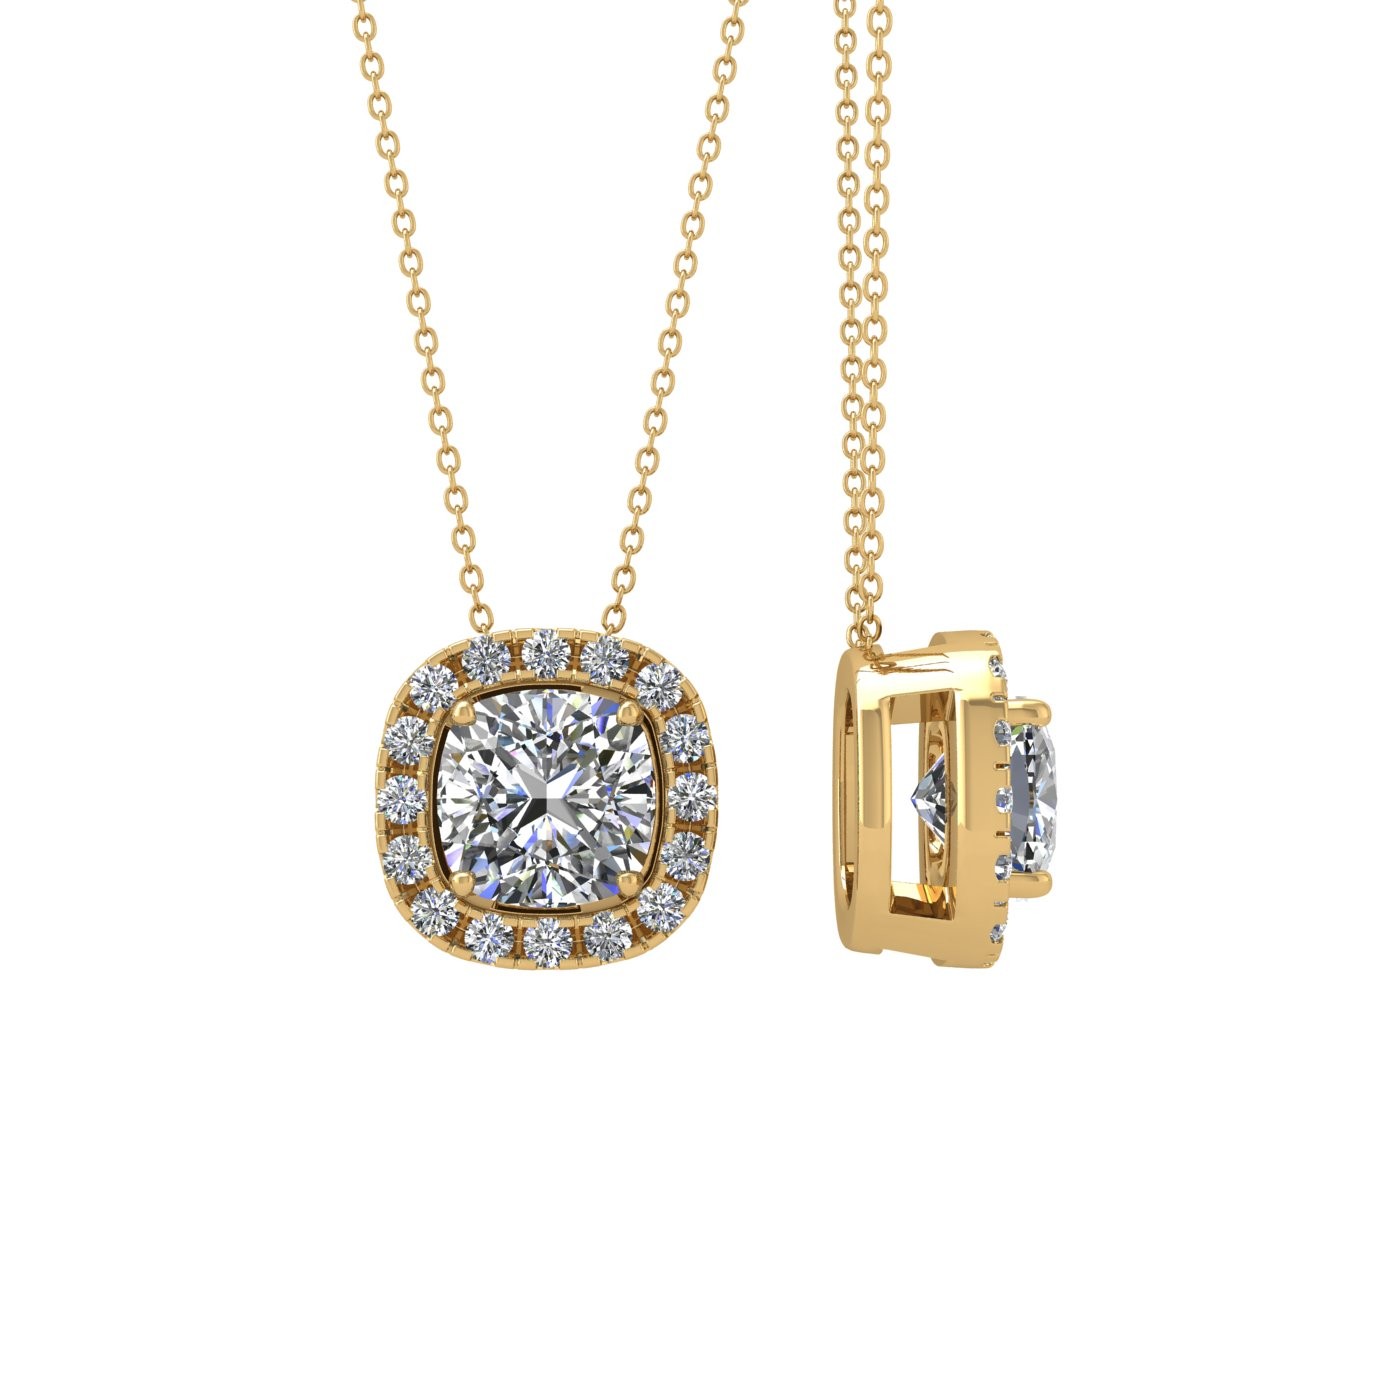 18k yellow gold  1,2 ct 4 prongs cushion shape diamond pendant with diamond pavÉ set halo Photos & images